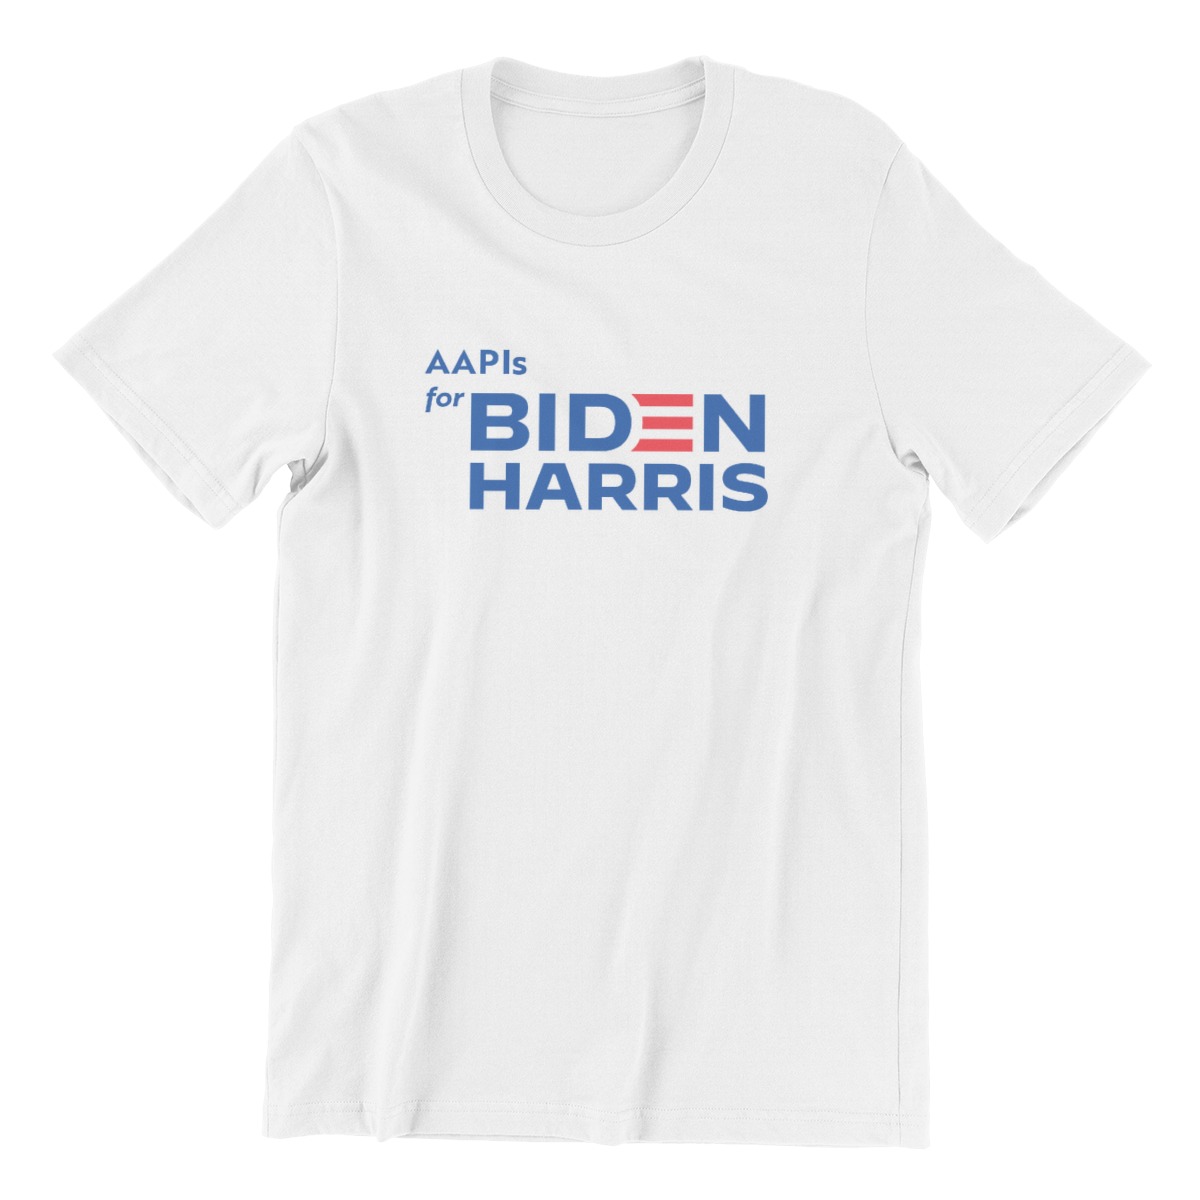 atinfor Biden Harris 2020 White Men's T Shirt Novelty Tops Bitumen Bike Life Tees Clothes Cotton Printed T-Shirt Plus Size